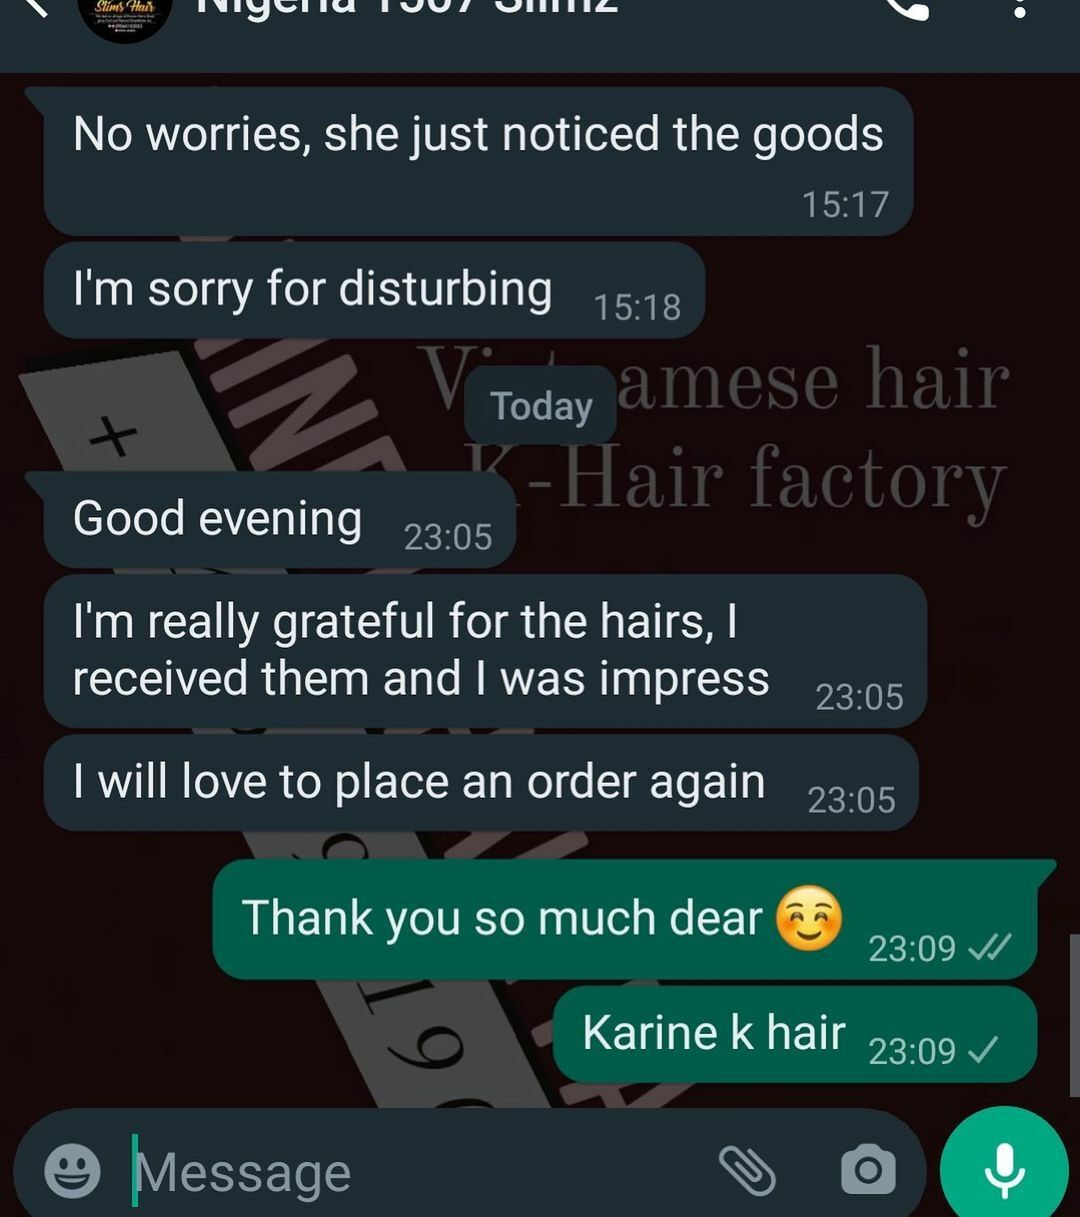 K-Hair Vietnam feedback